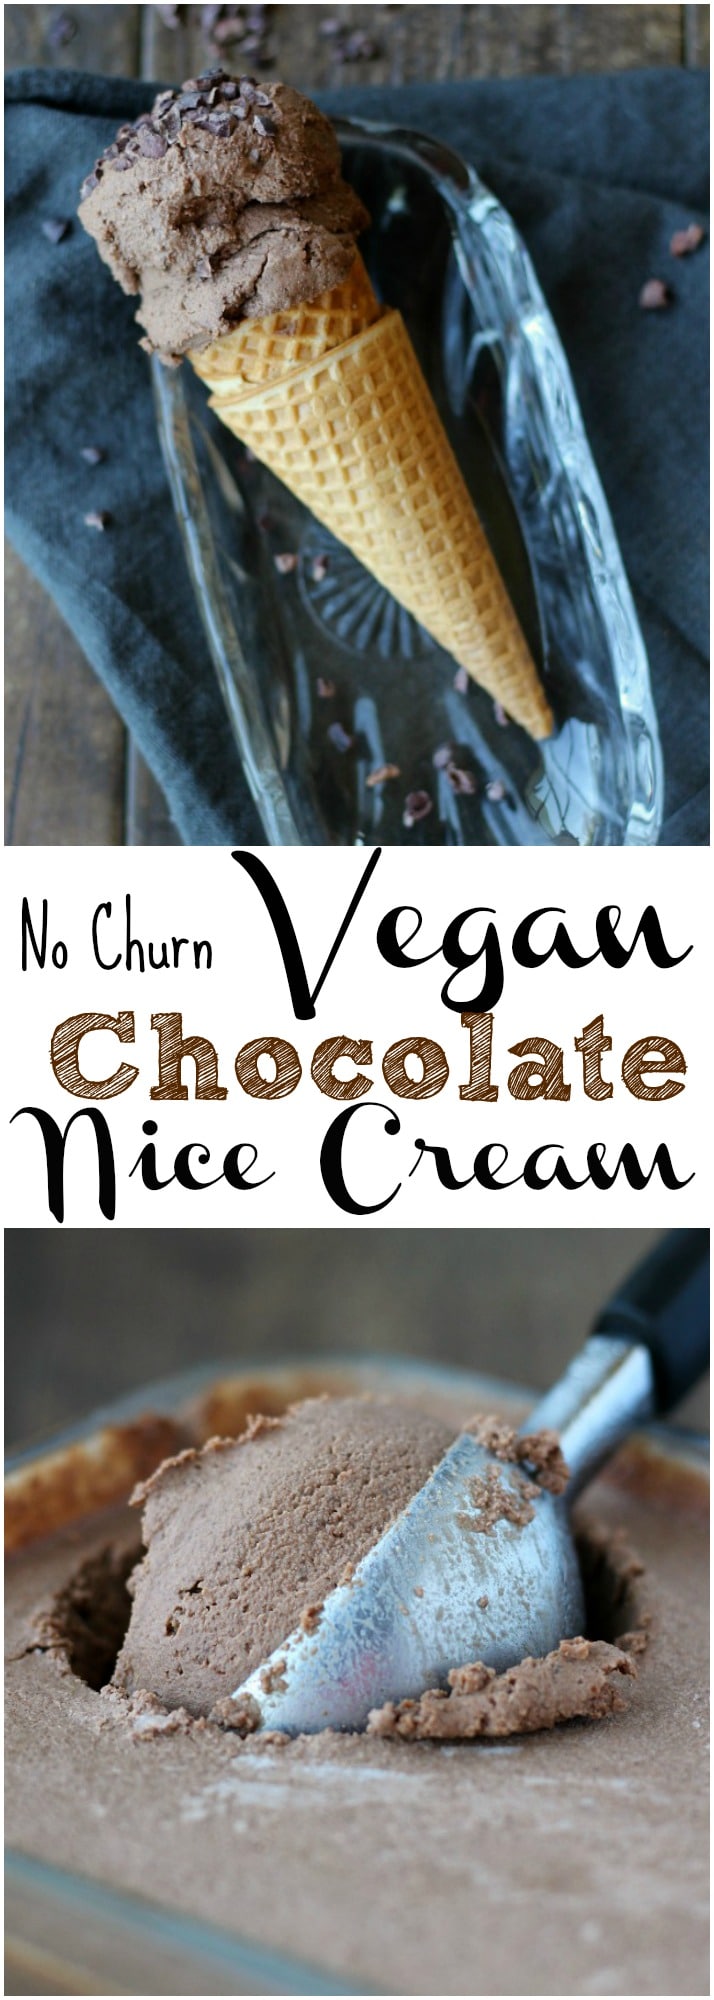 The best Vegan chocolate nice cream you will ever eat! No churn and few ingredients | gardeninthekitchen.com